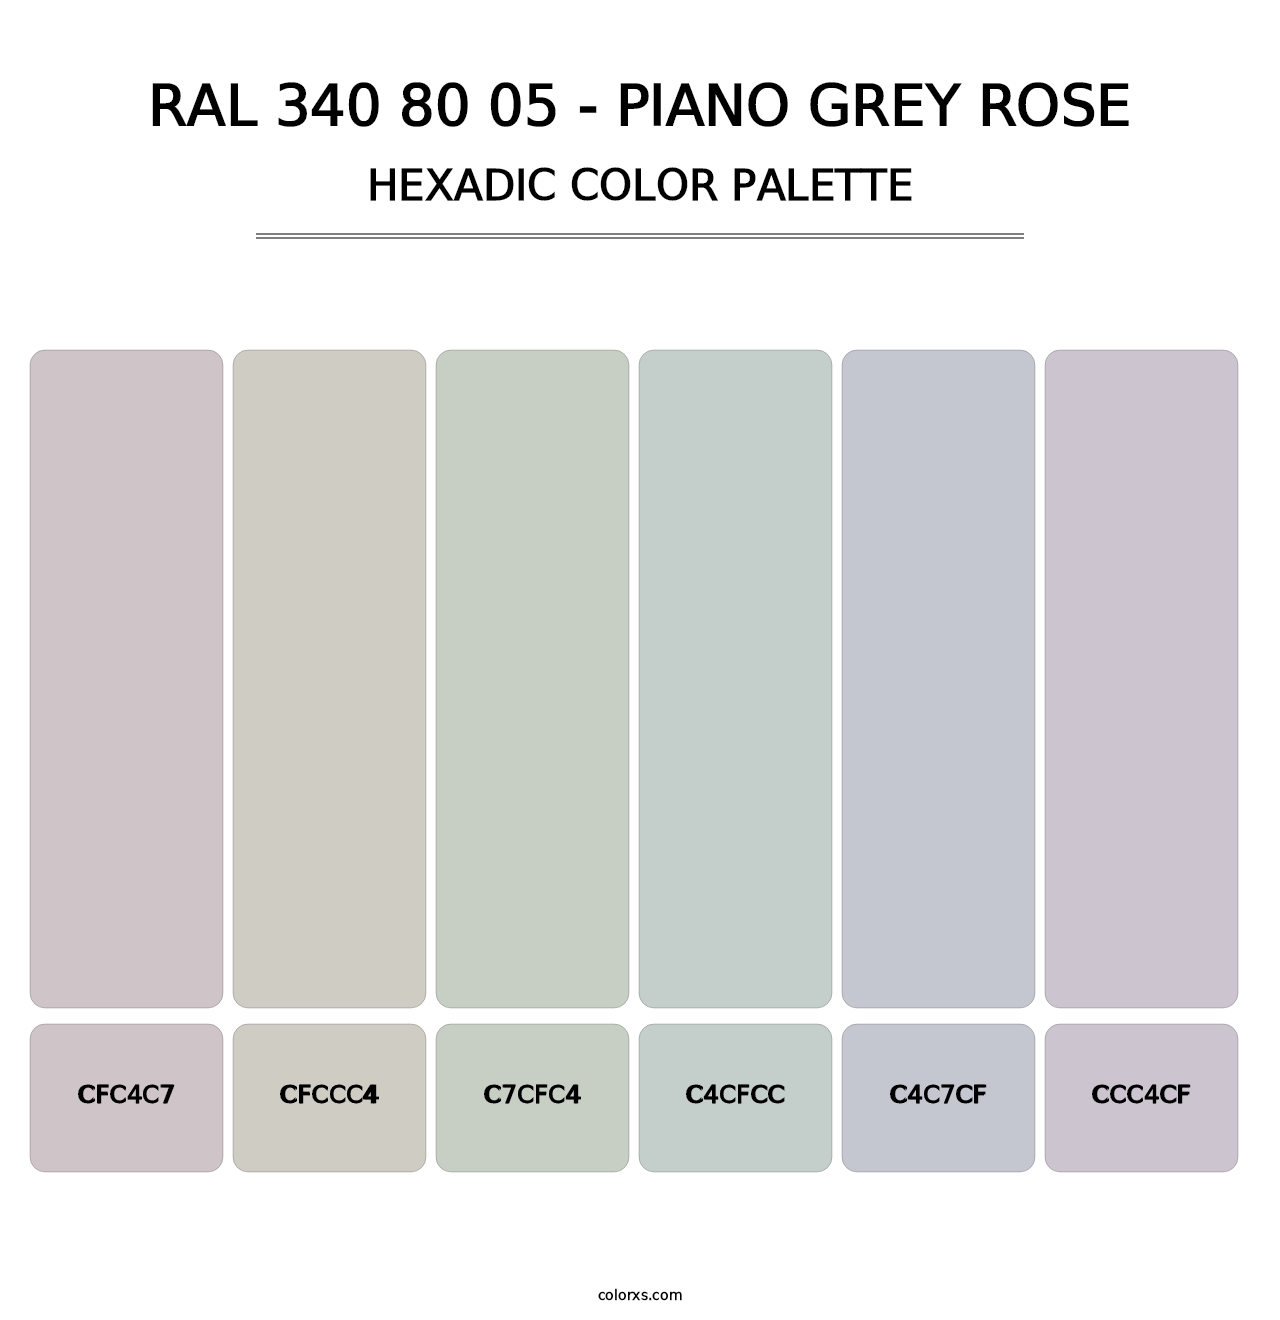 RAL 340 80 05 - Piano Grey Rose - Hexadic Color Palette